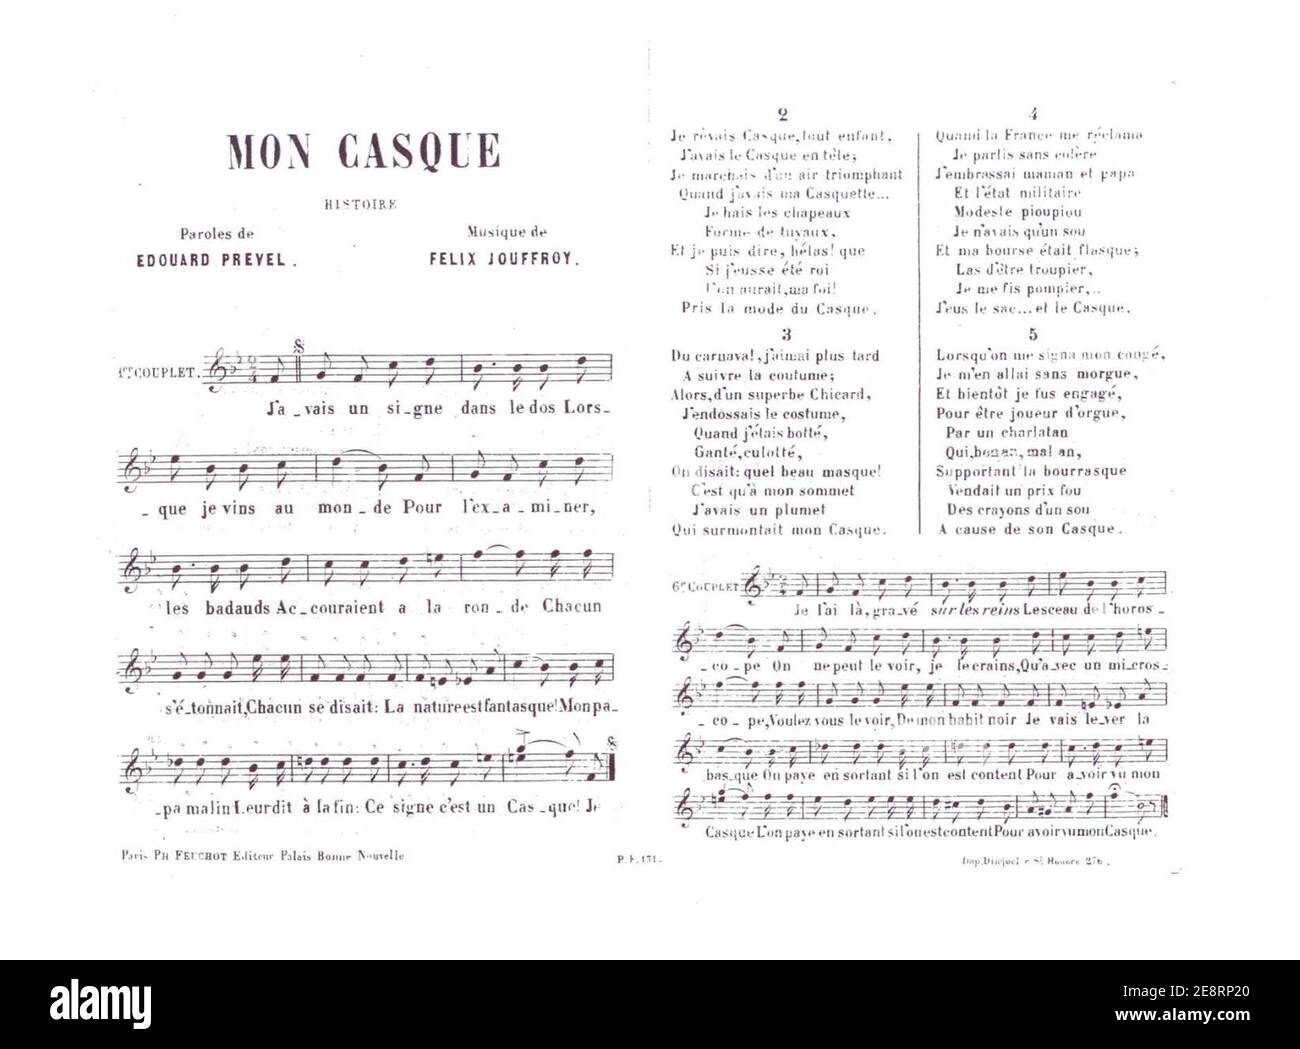 Casque de musique hi-res stock photography and images - Alamy